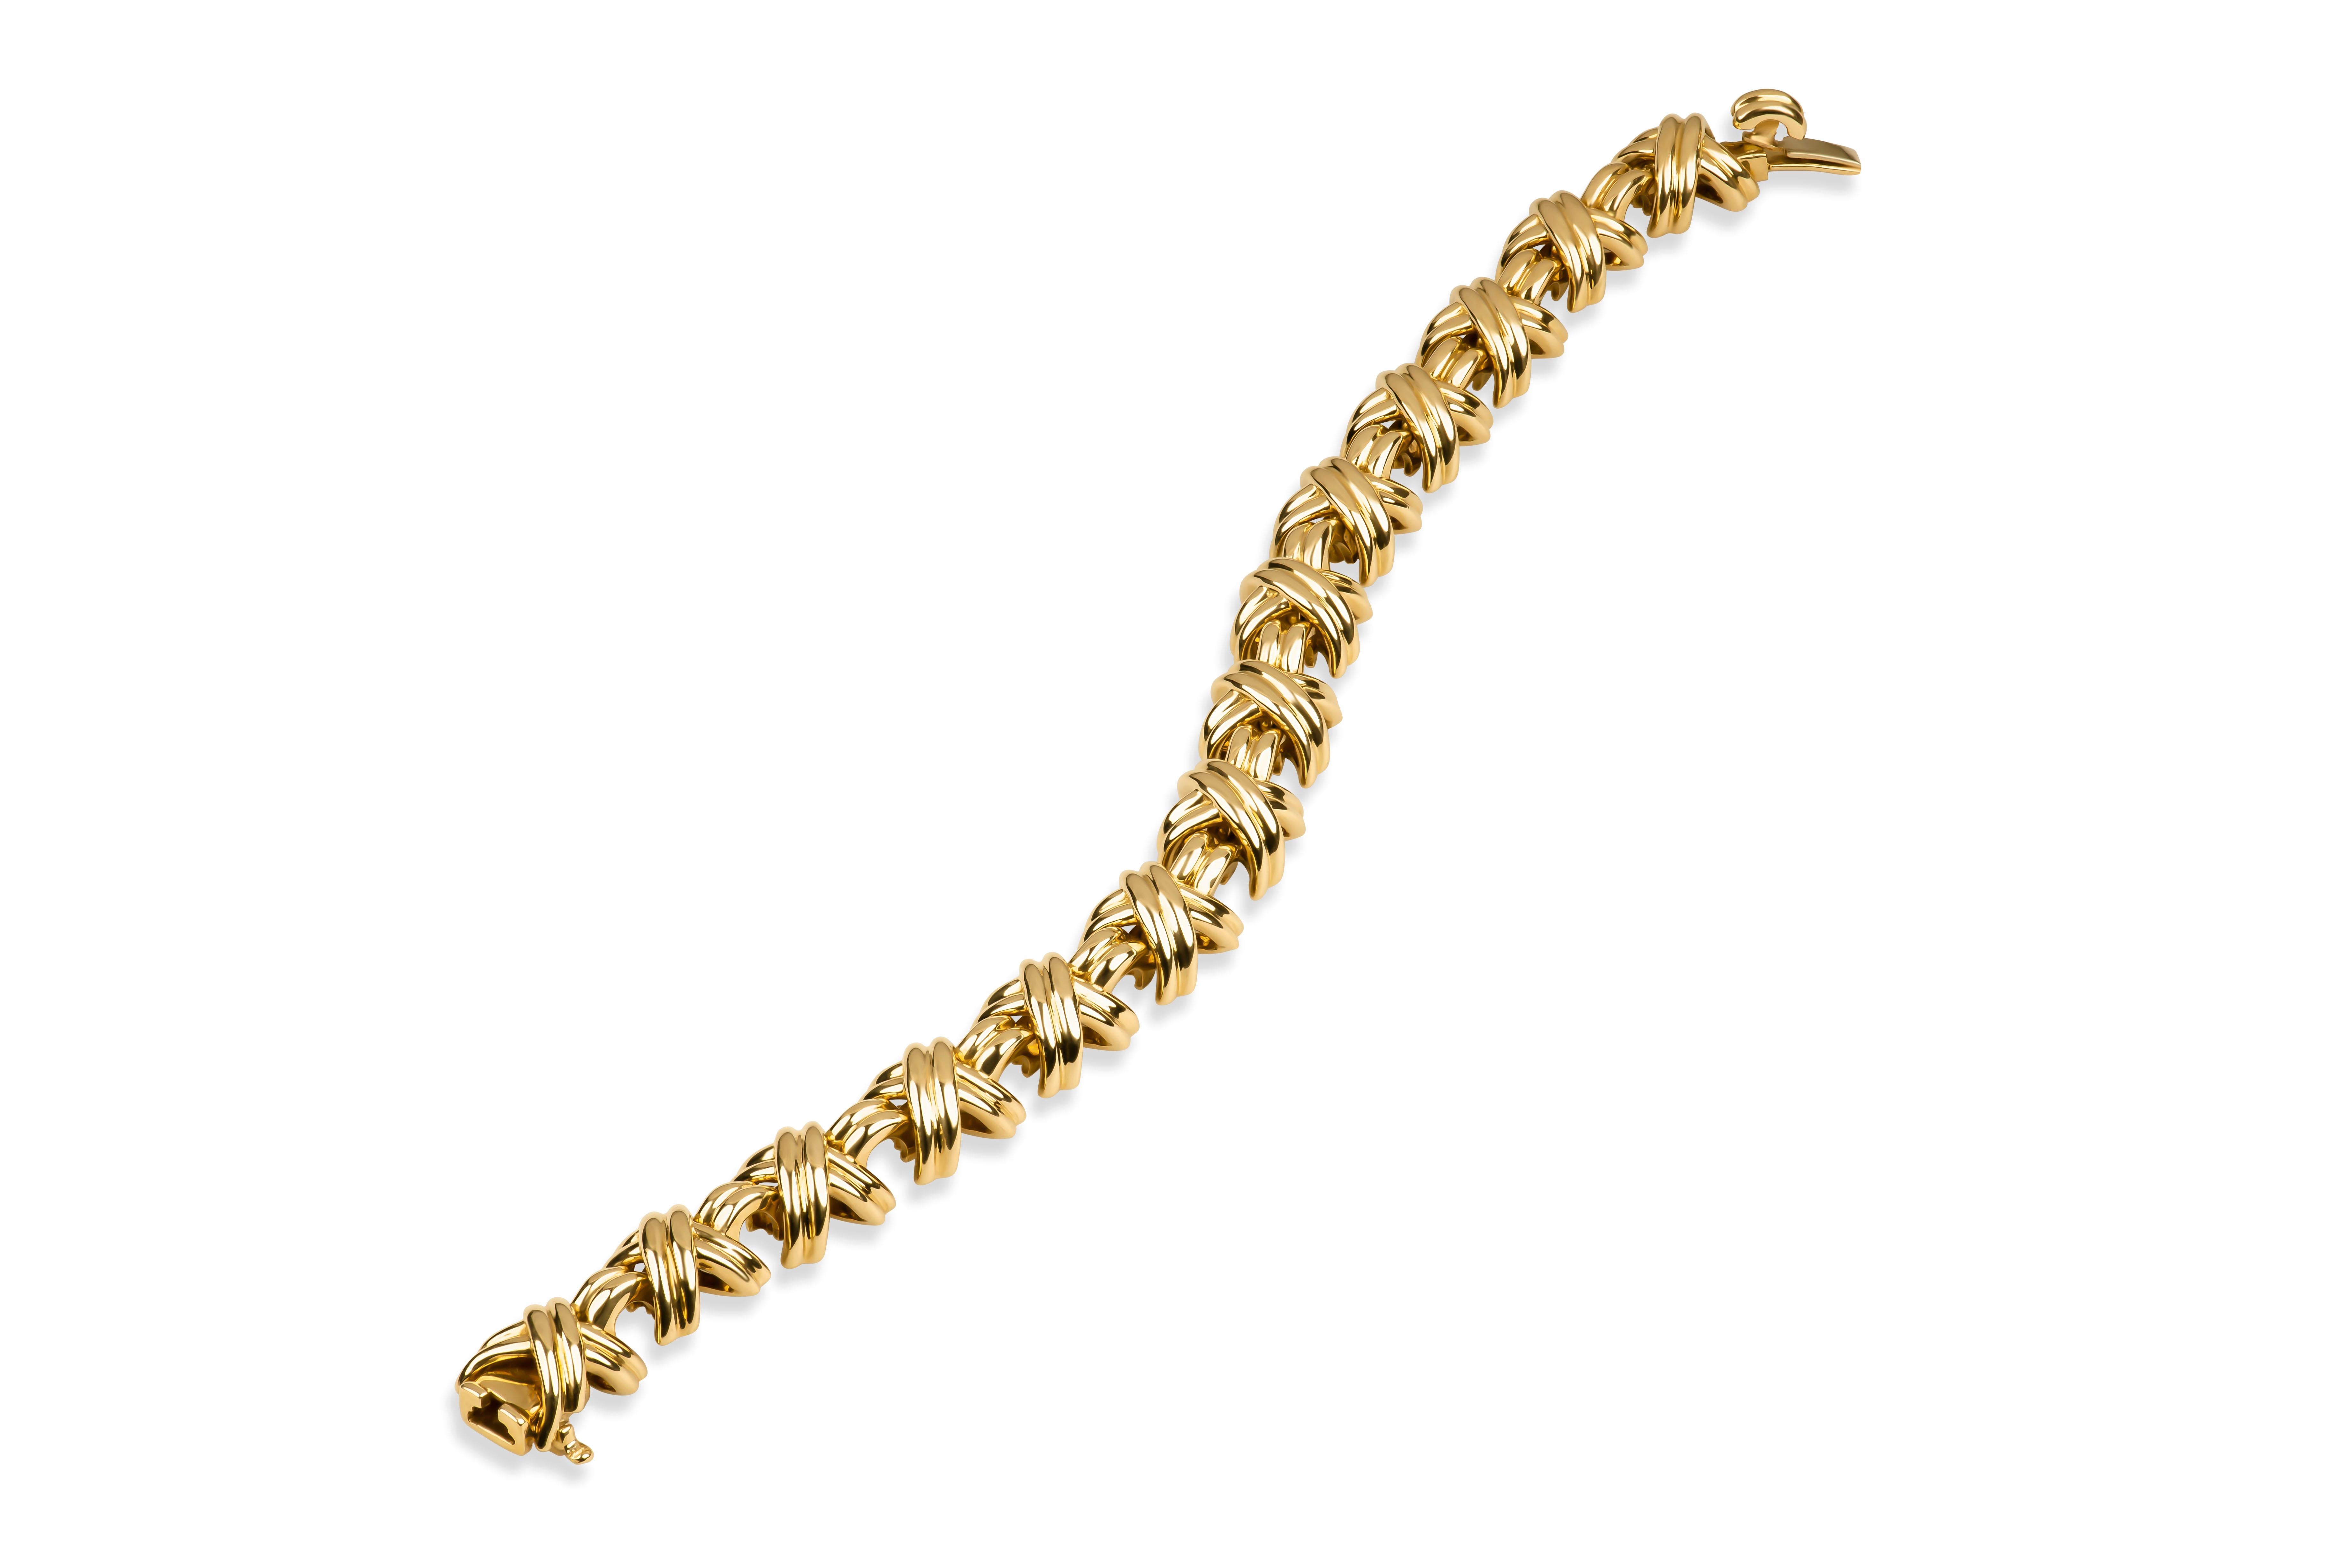 Tiffany & Co Signature X design bracelet in 18k yellow gold. 